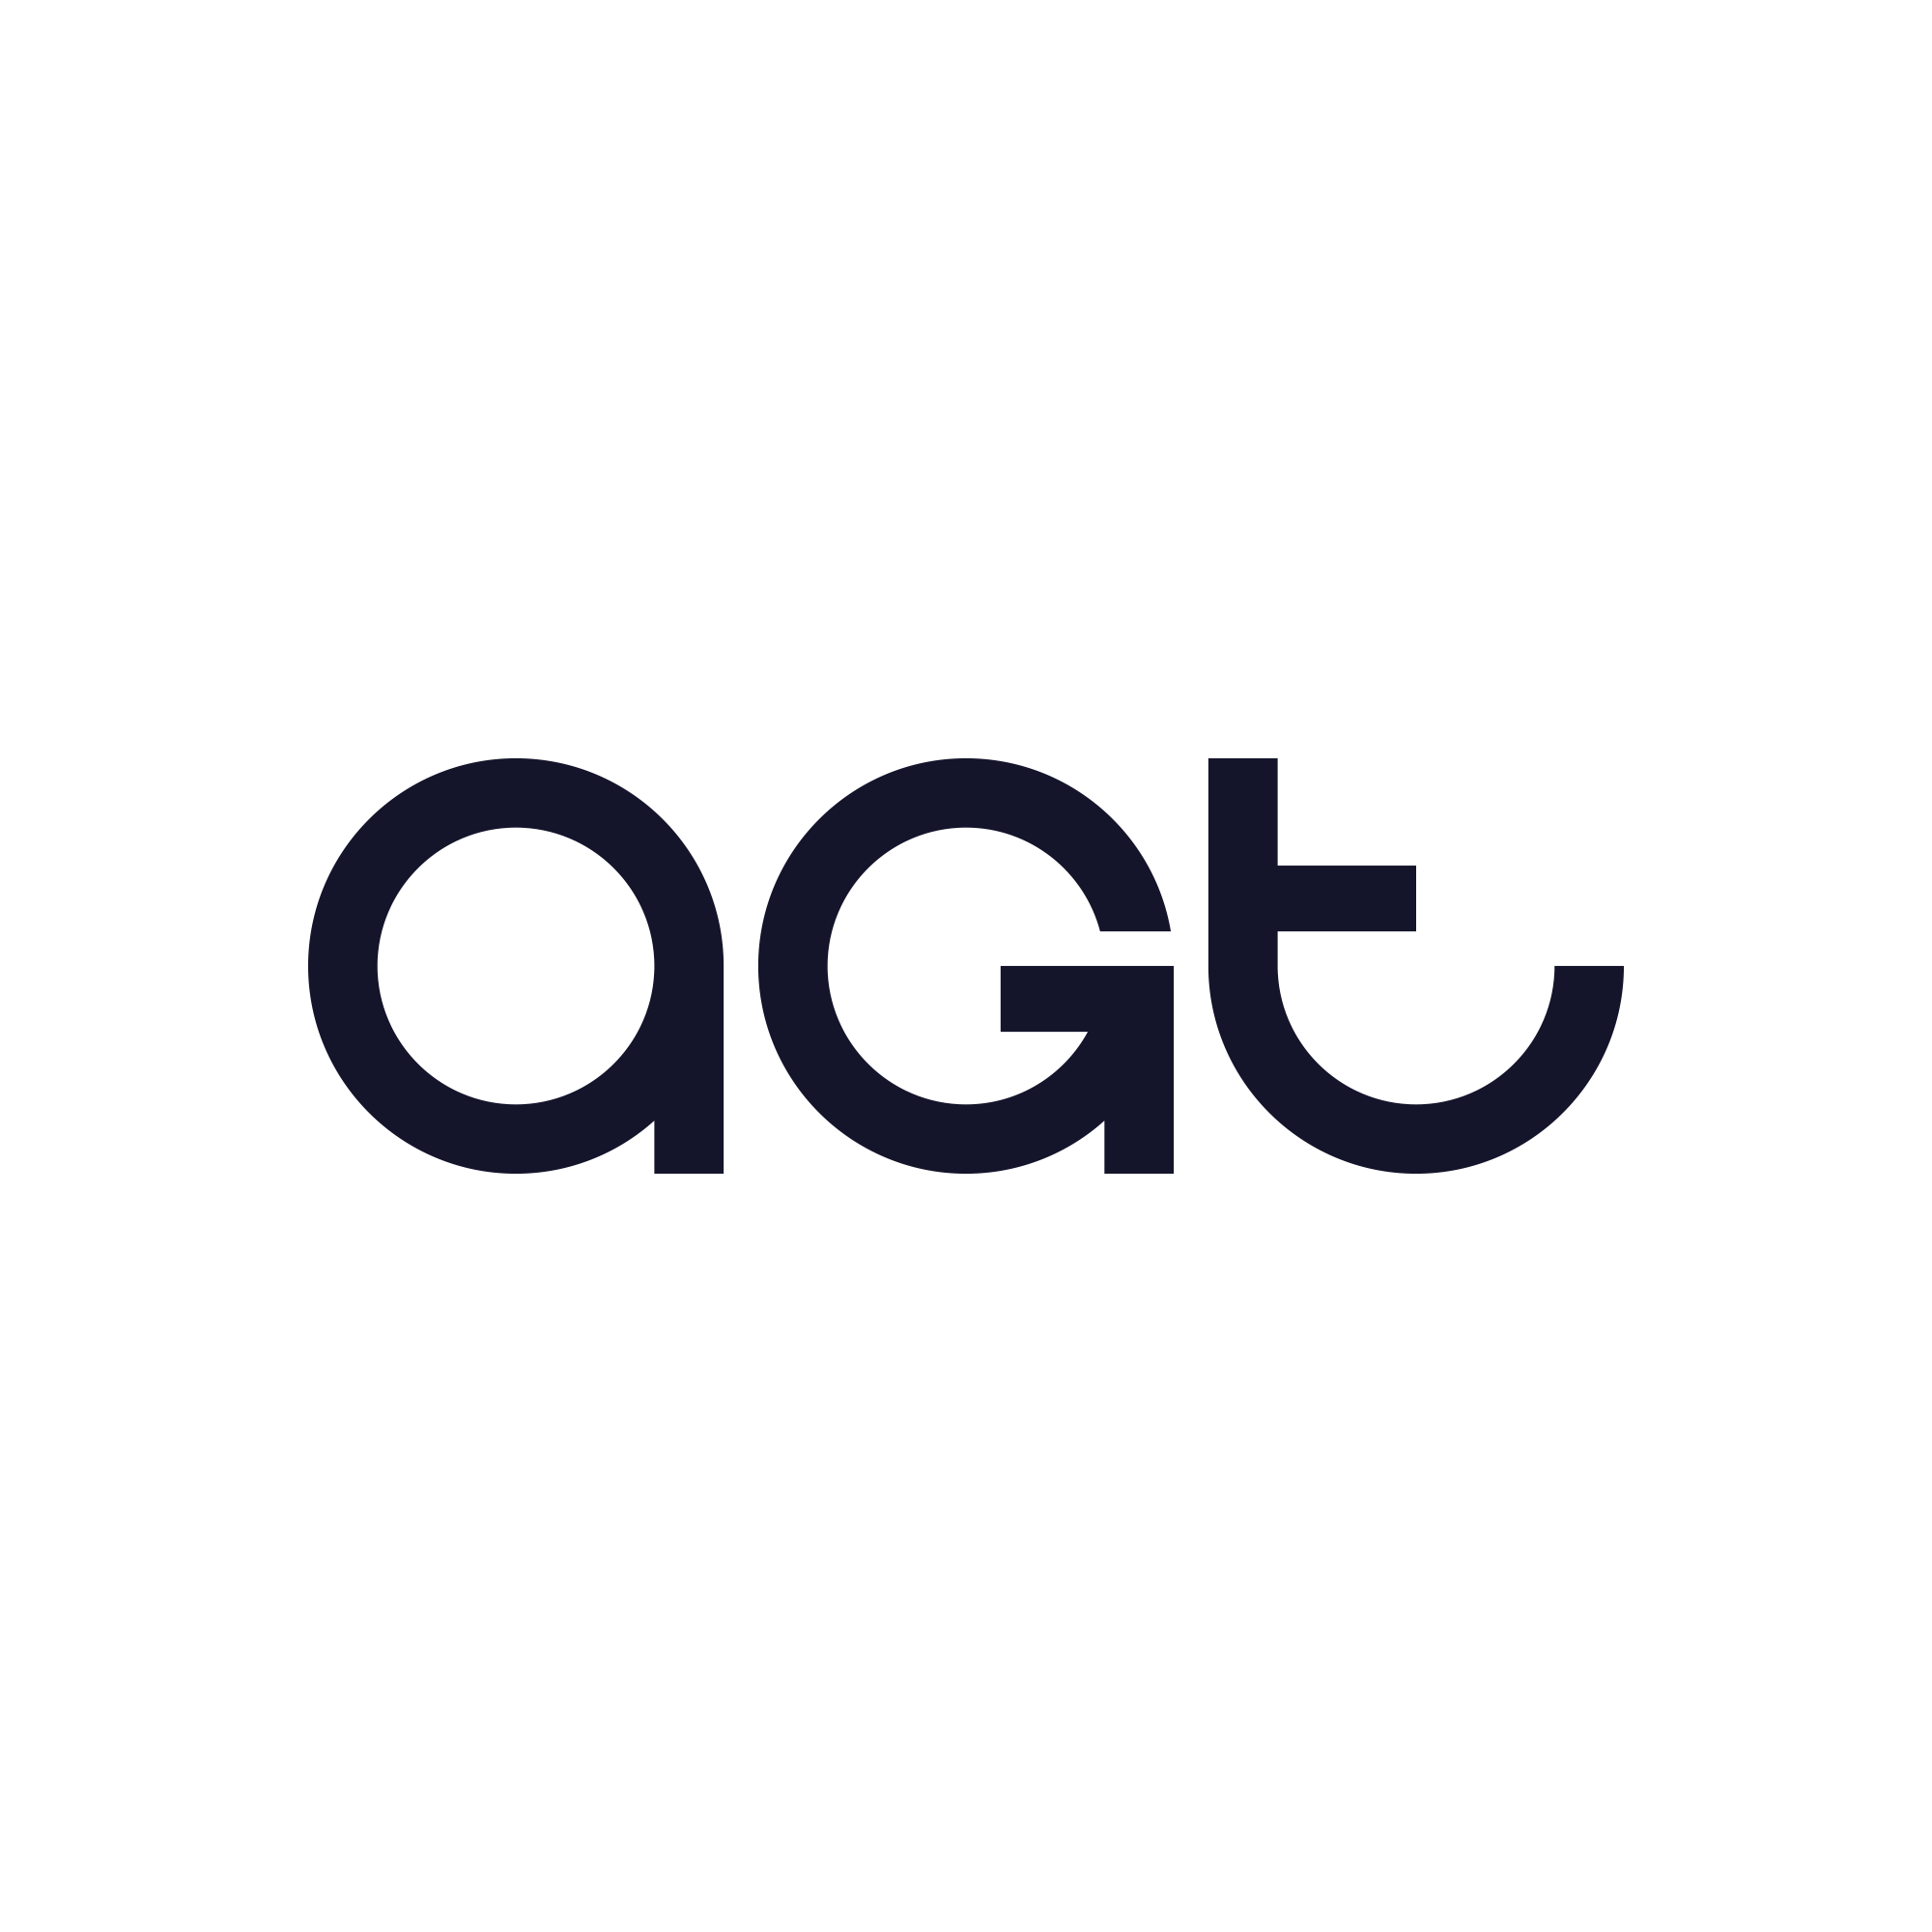 agt - agency for global transport